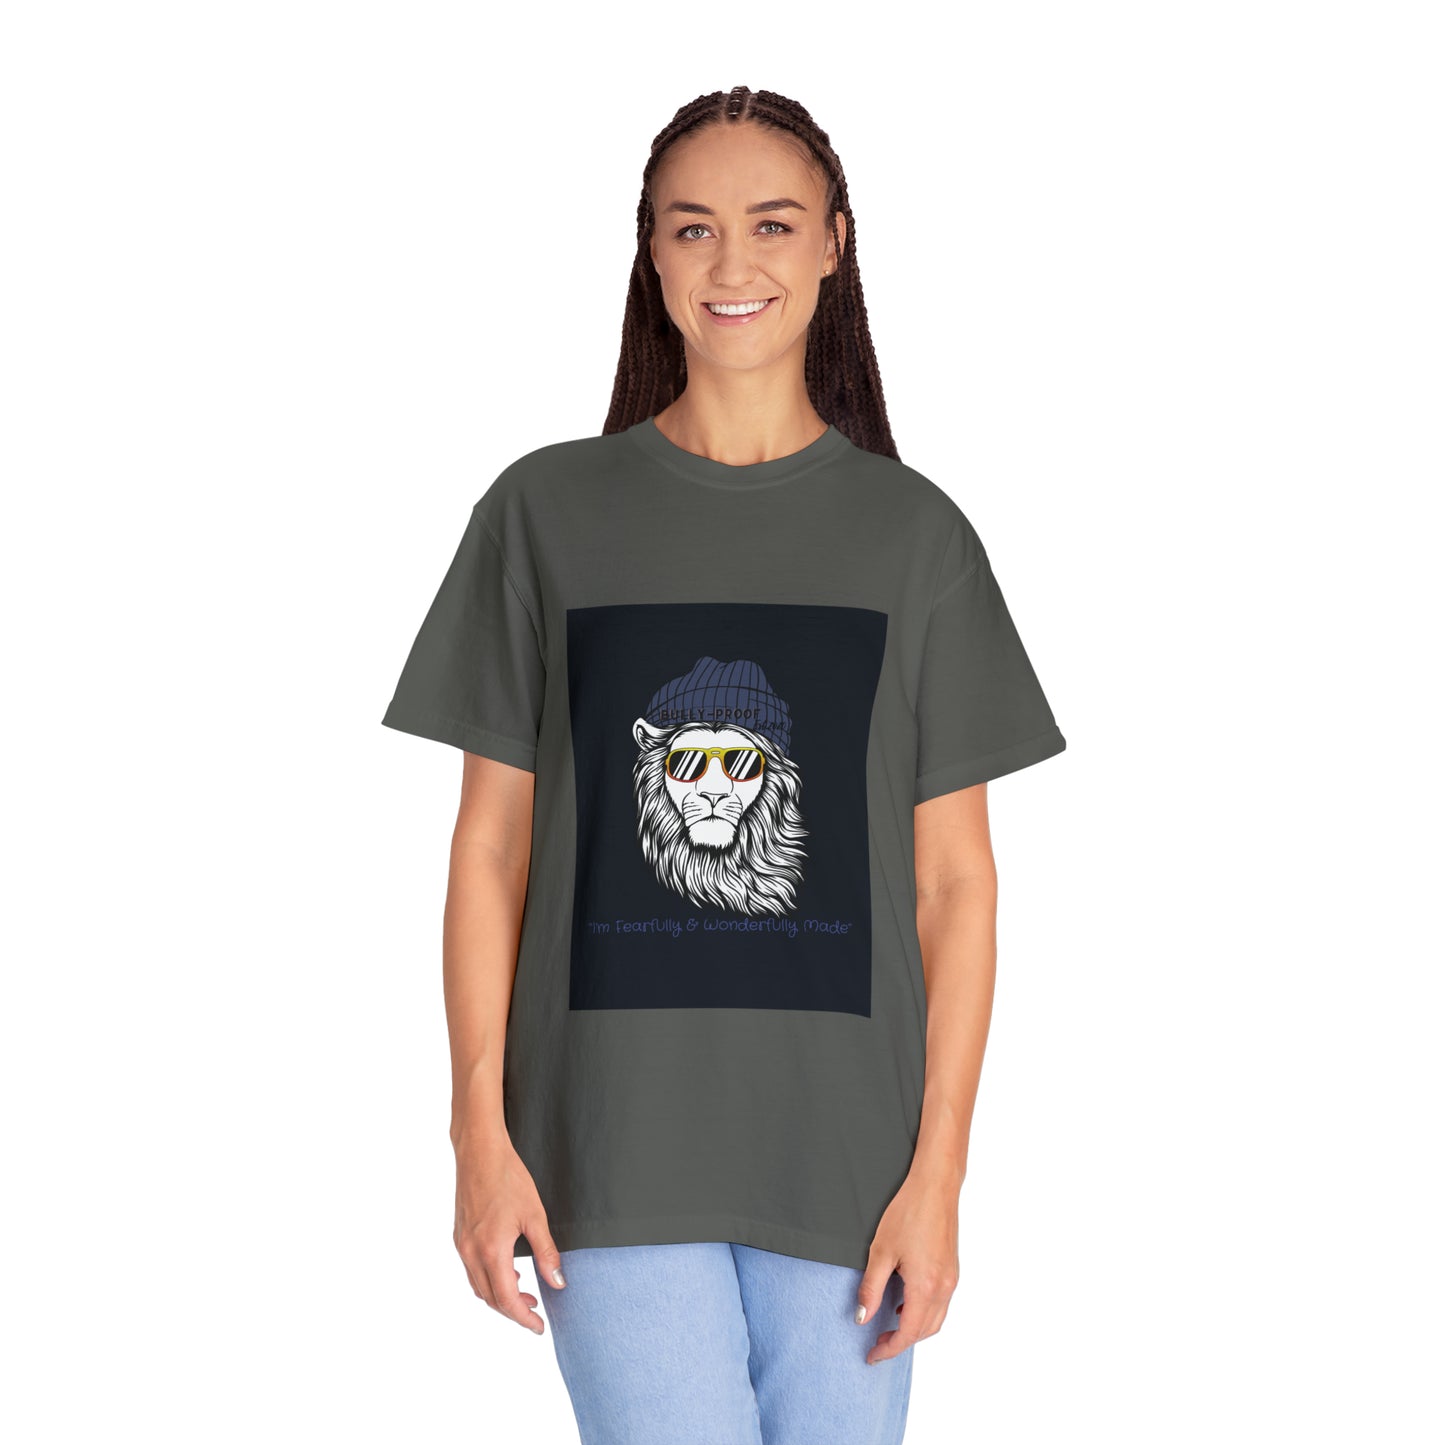 Bully-Proof Unisex Garment-Dyed T-shirt